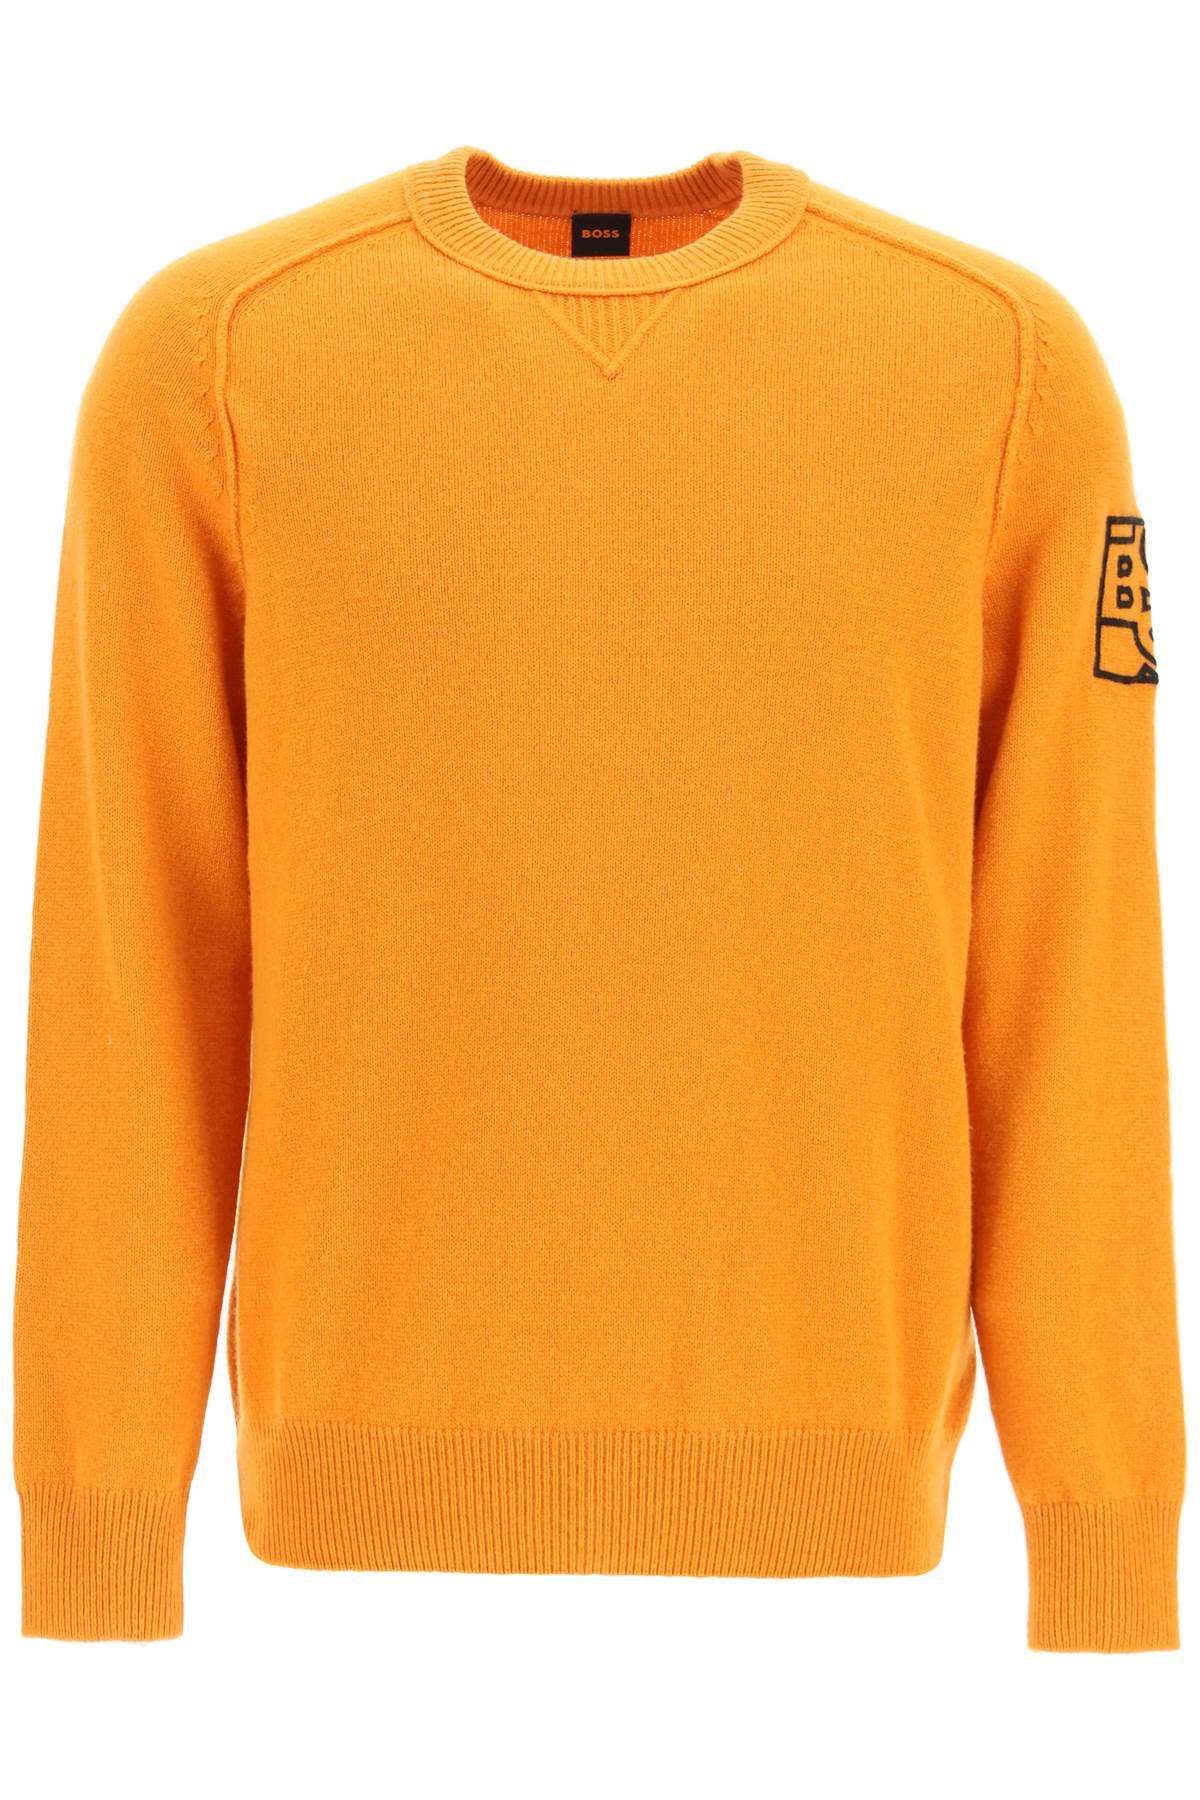 BOSS by HUGO BOSS Shaken Logo Embroidery Sweater in Orange for Men | Lyst